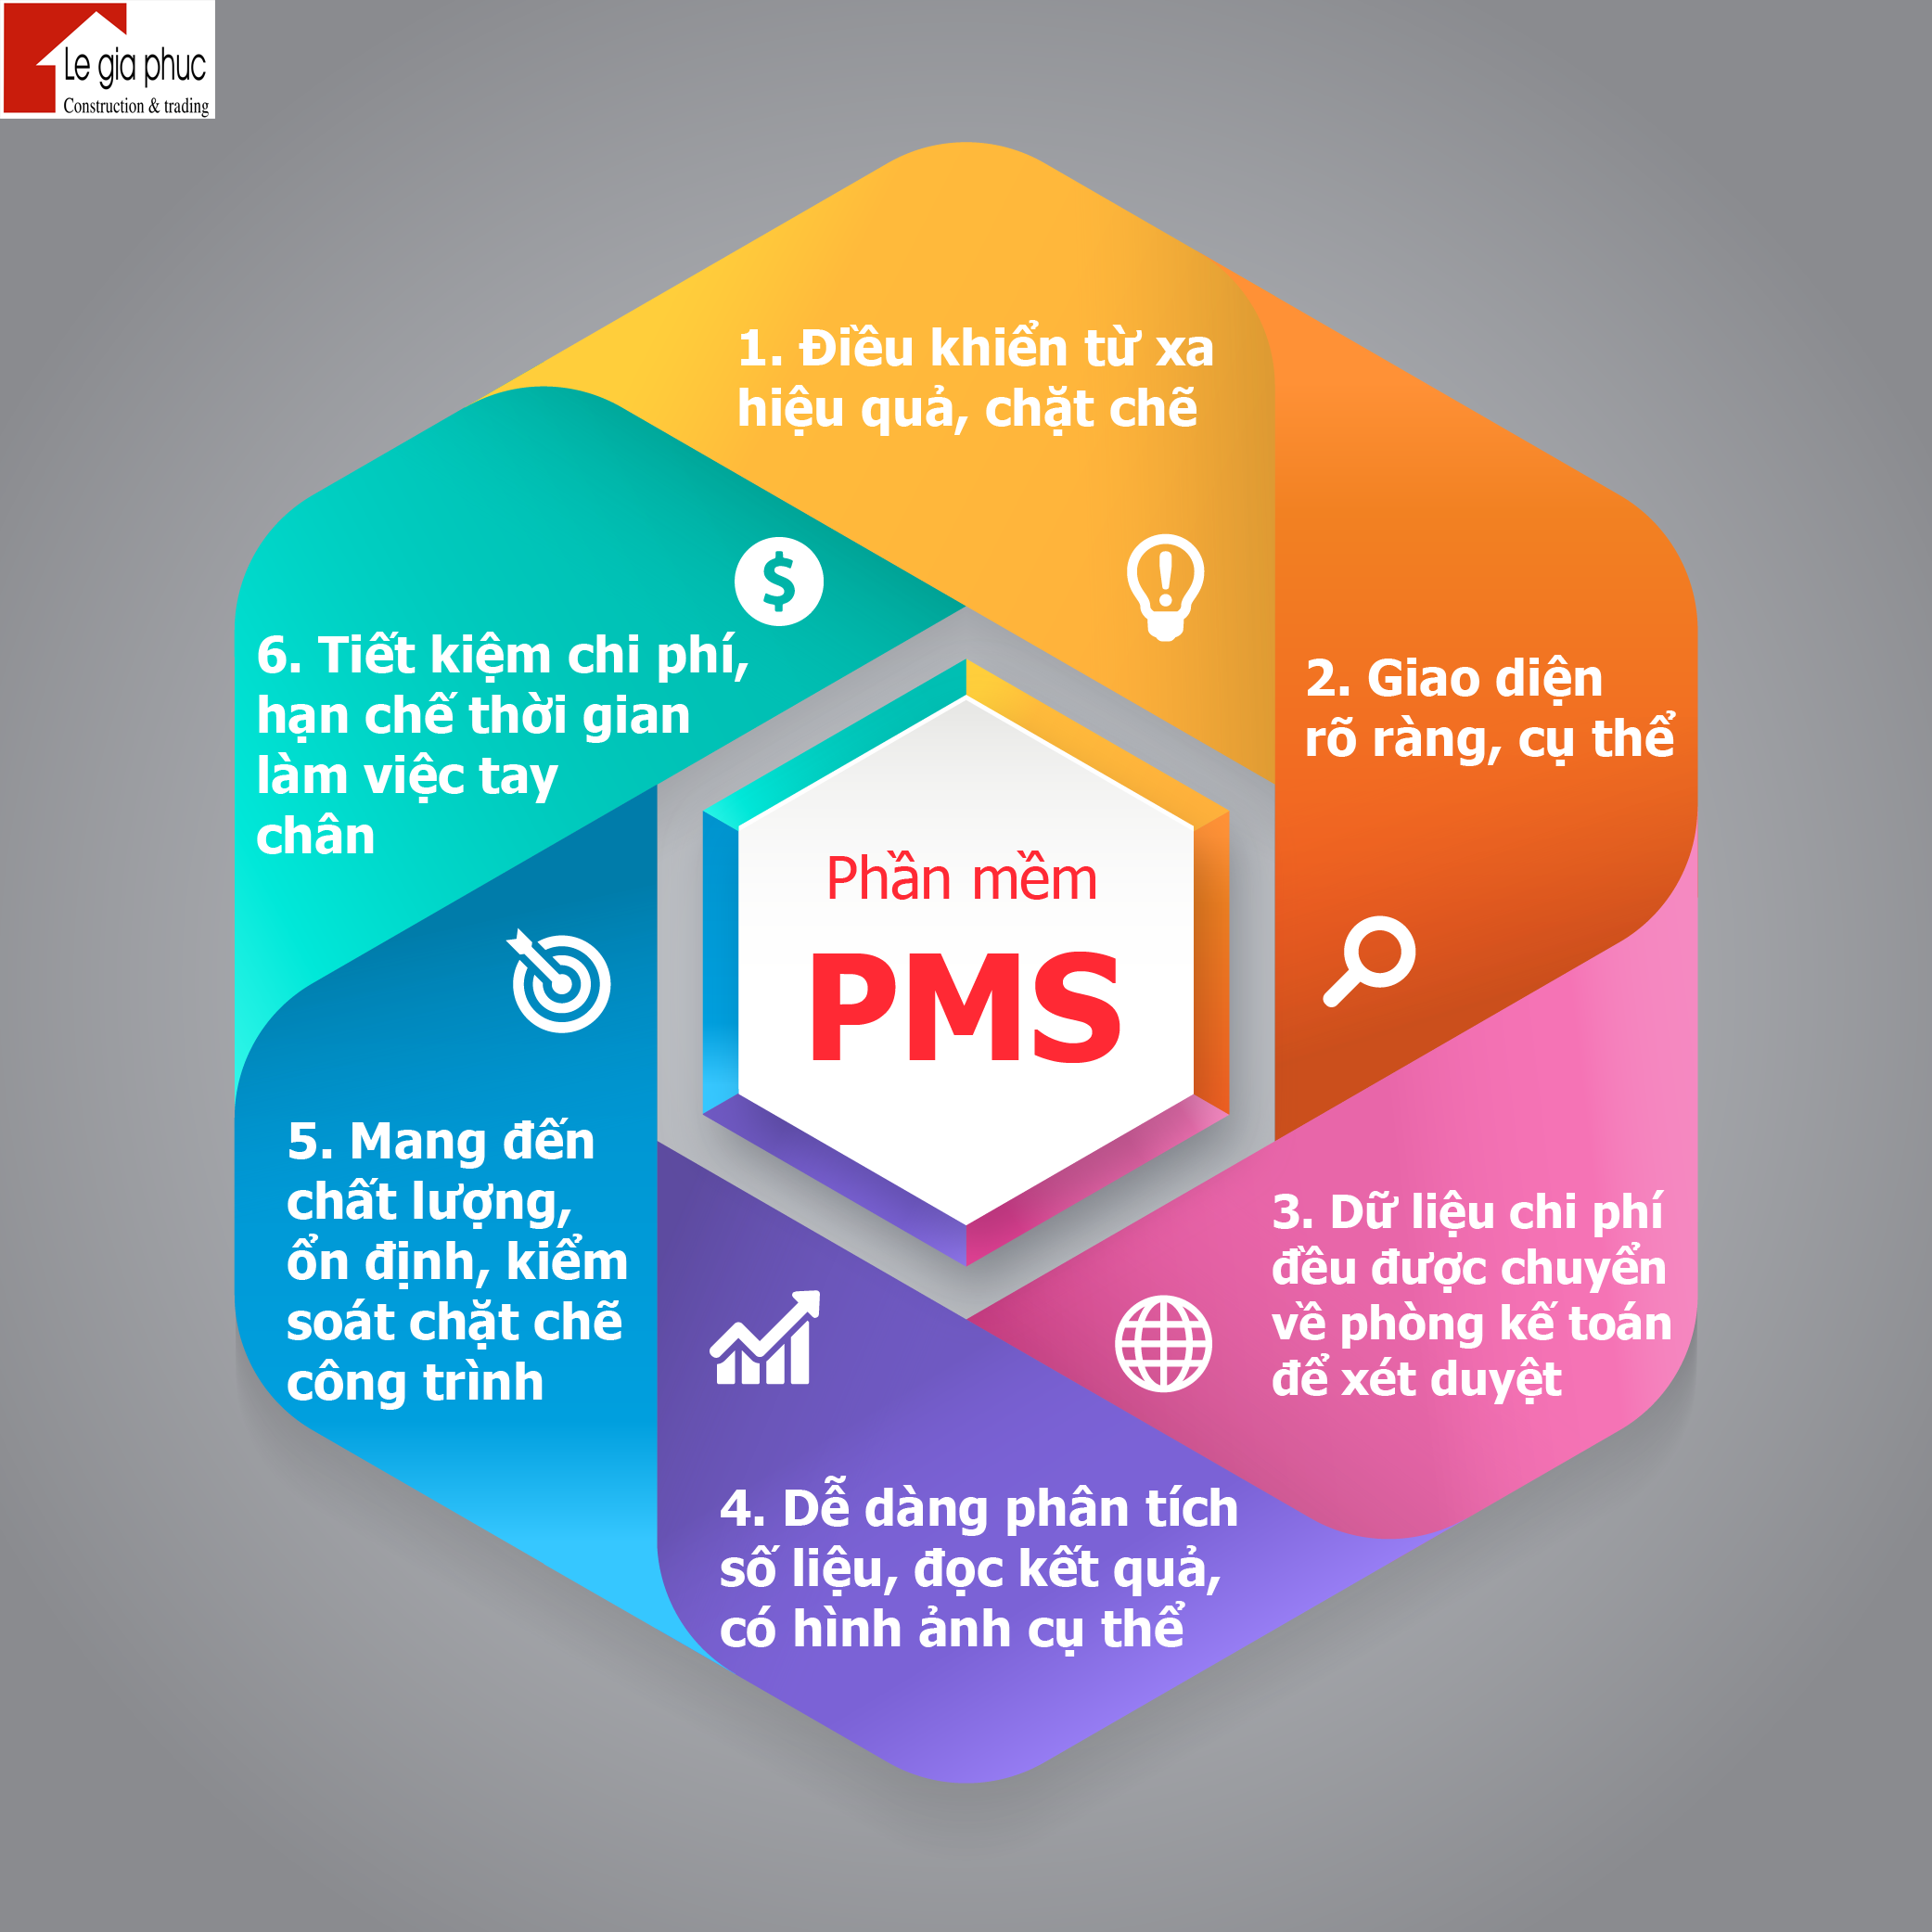 Lợi ích phần mềm PMS